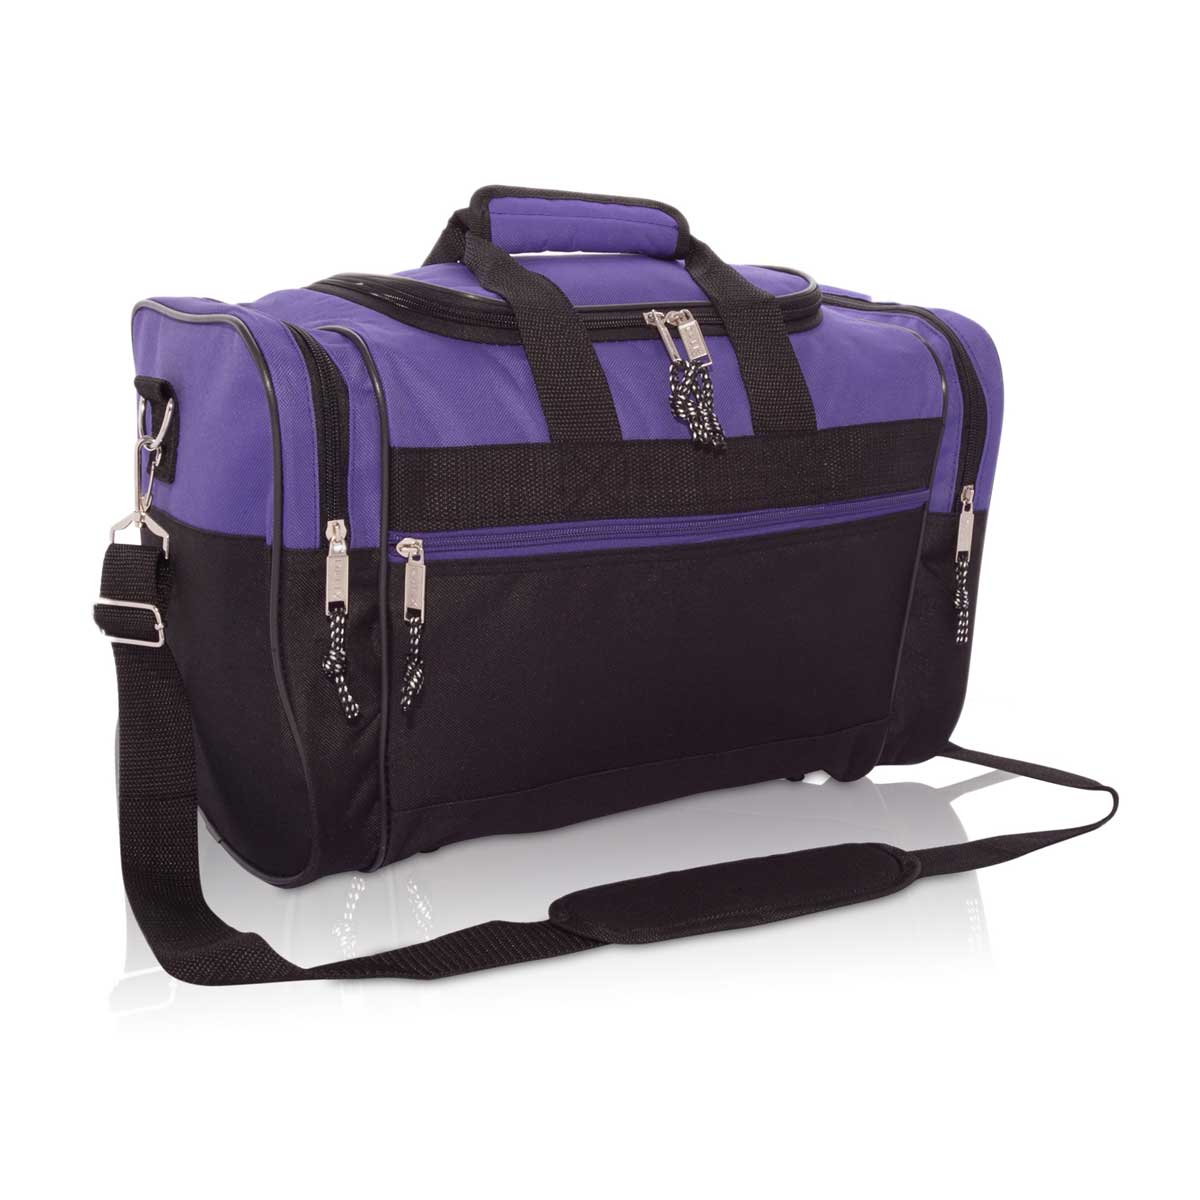 Blank Duffle Bag Duffel Bag Travel Size Sports Durable Gym Purple